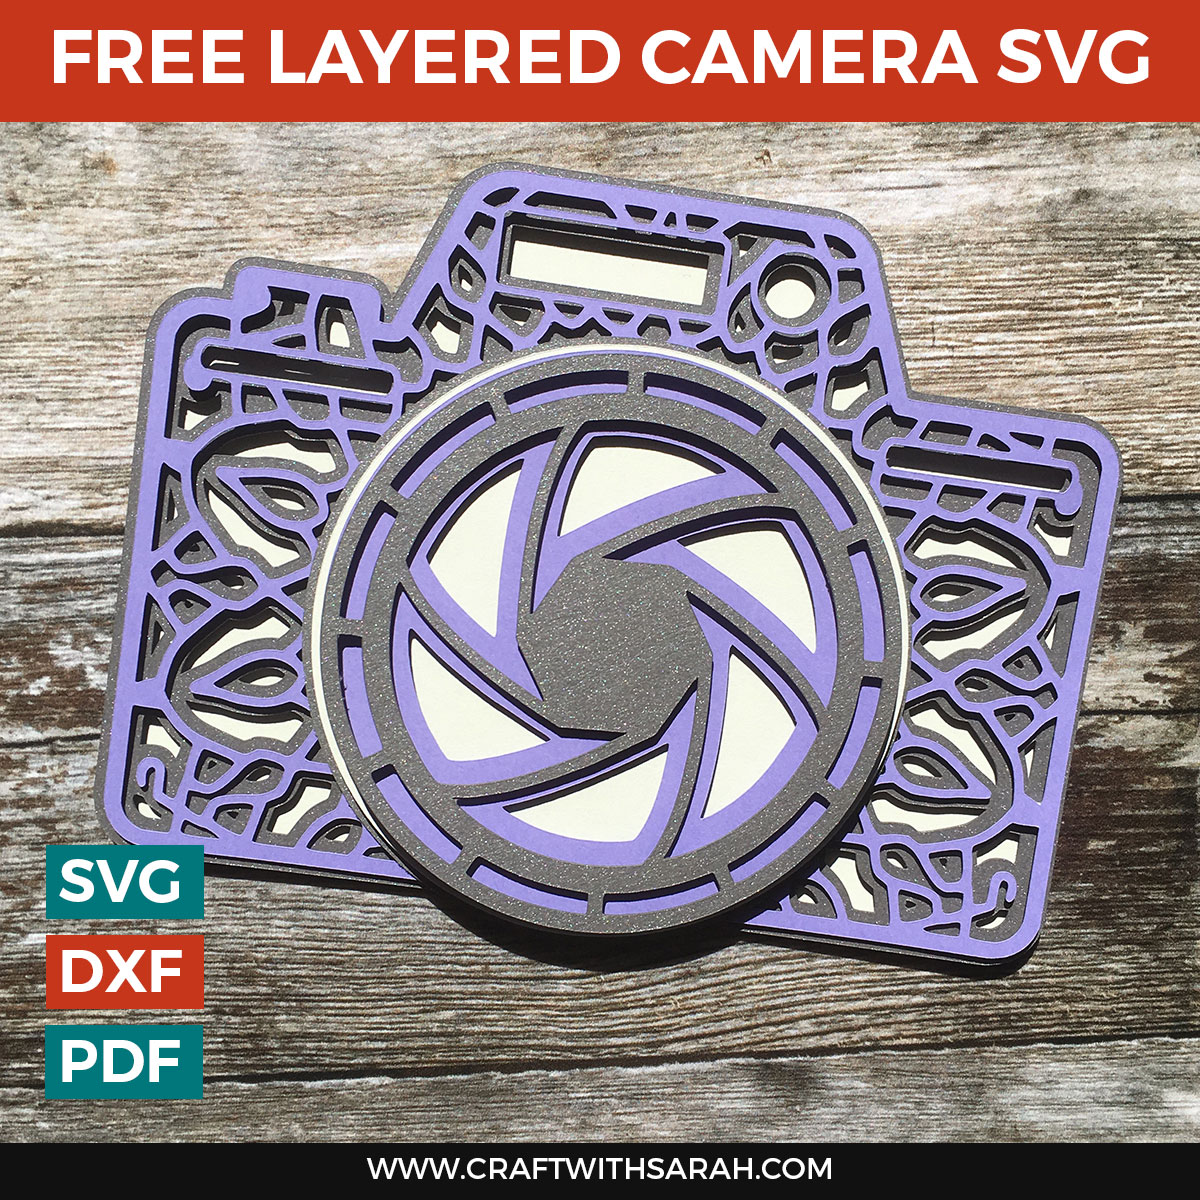 Download Free Layered Camera SVG | Craft With Sarah